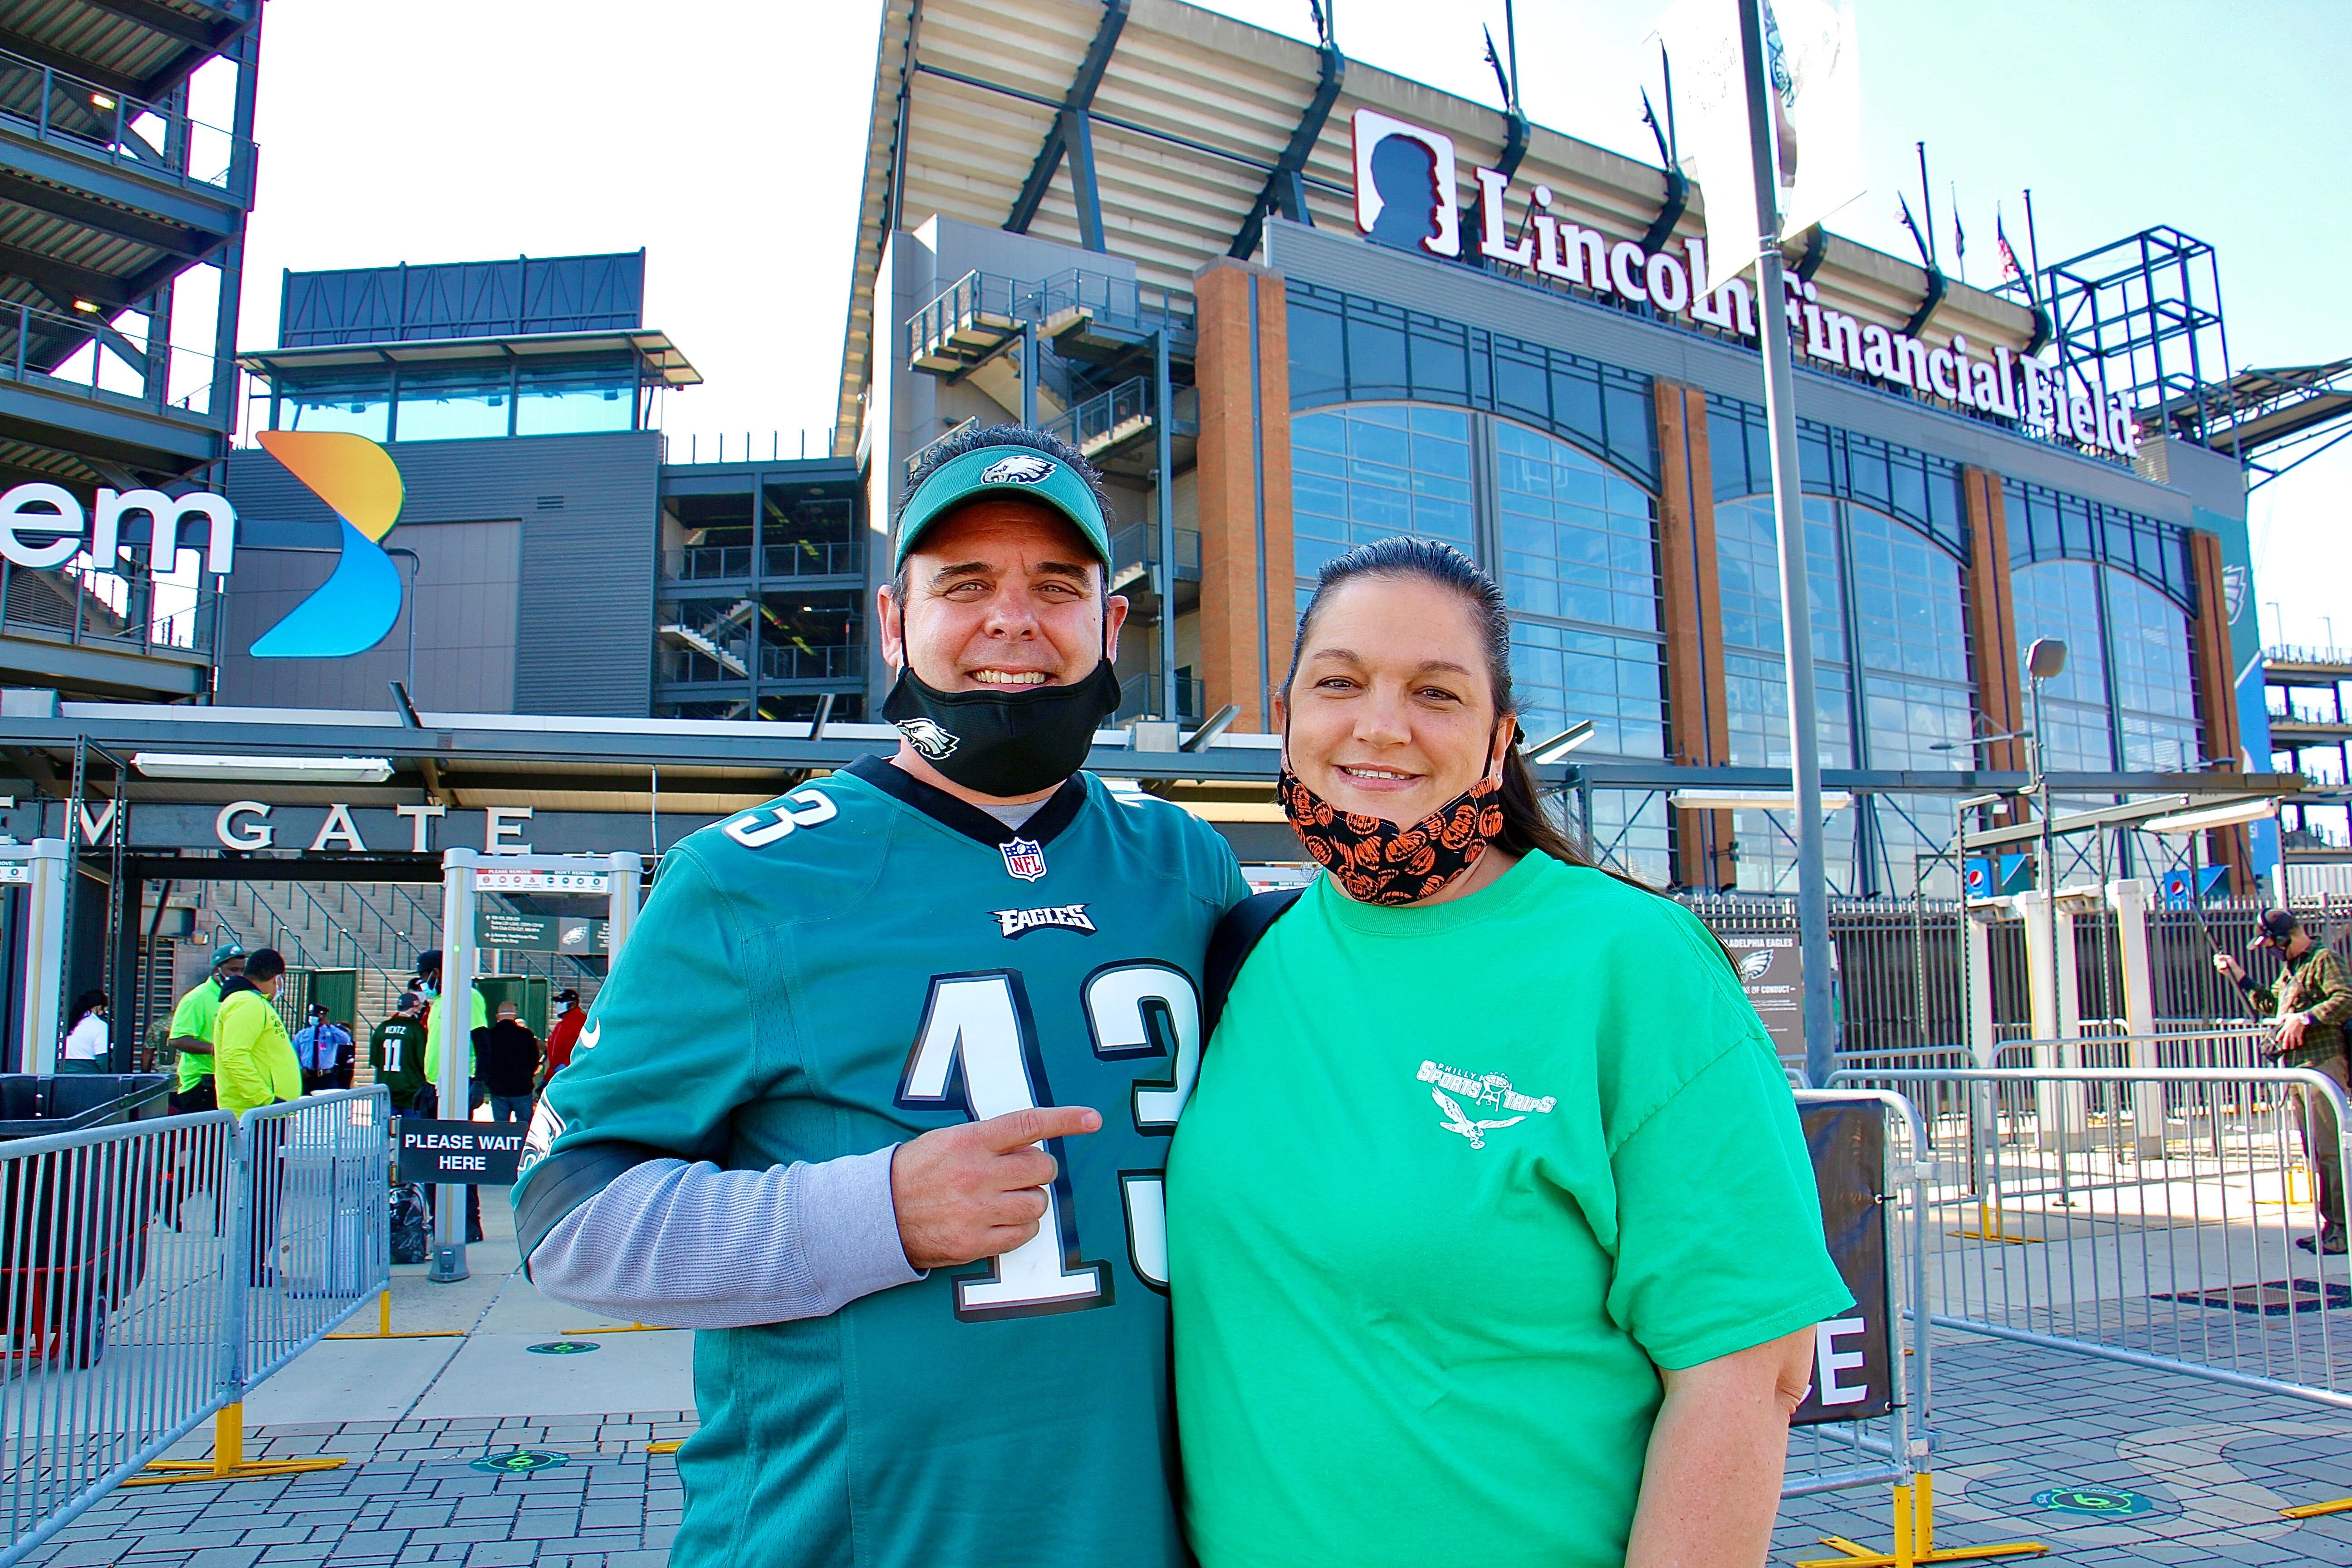 Chris Romanelli and his wife Jennifer prepare to enter Eagles stadium